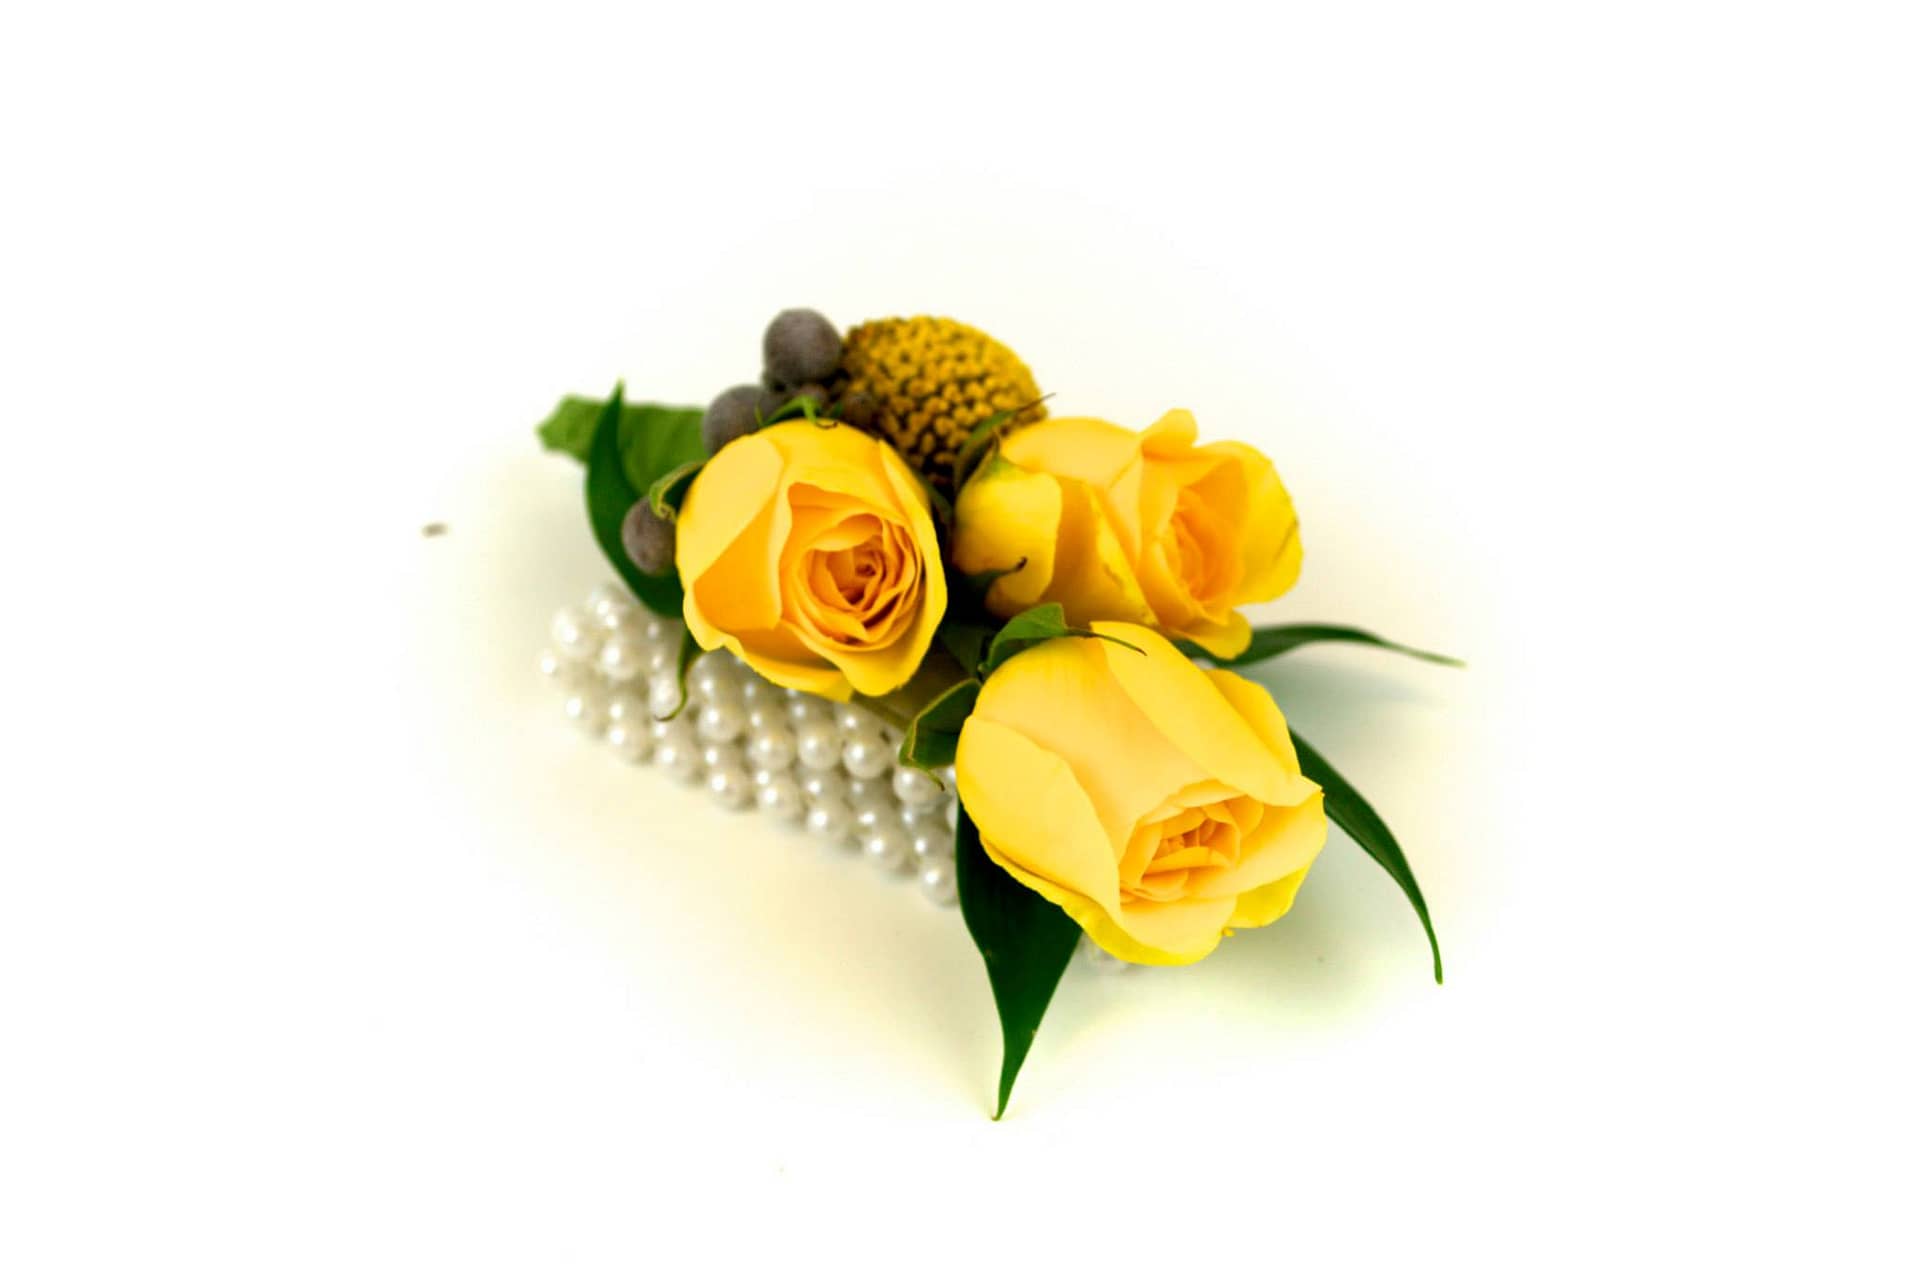 minneapolis-florist-wedding-yellow-rose